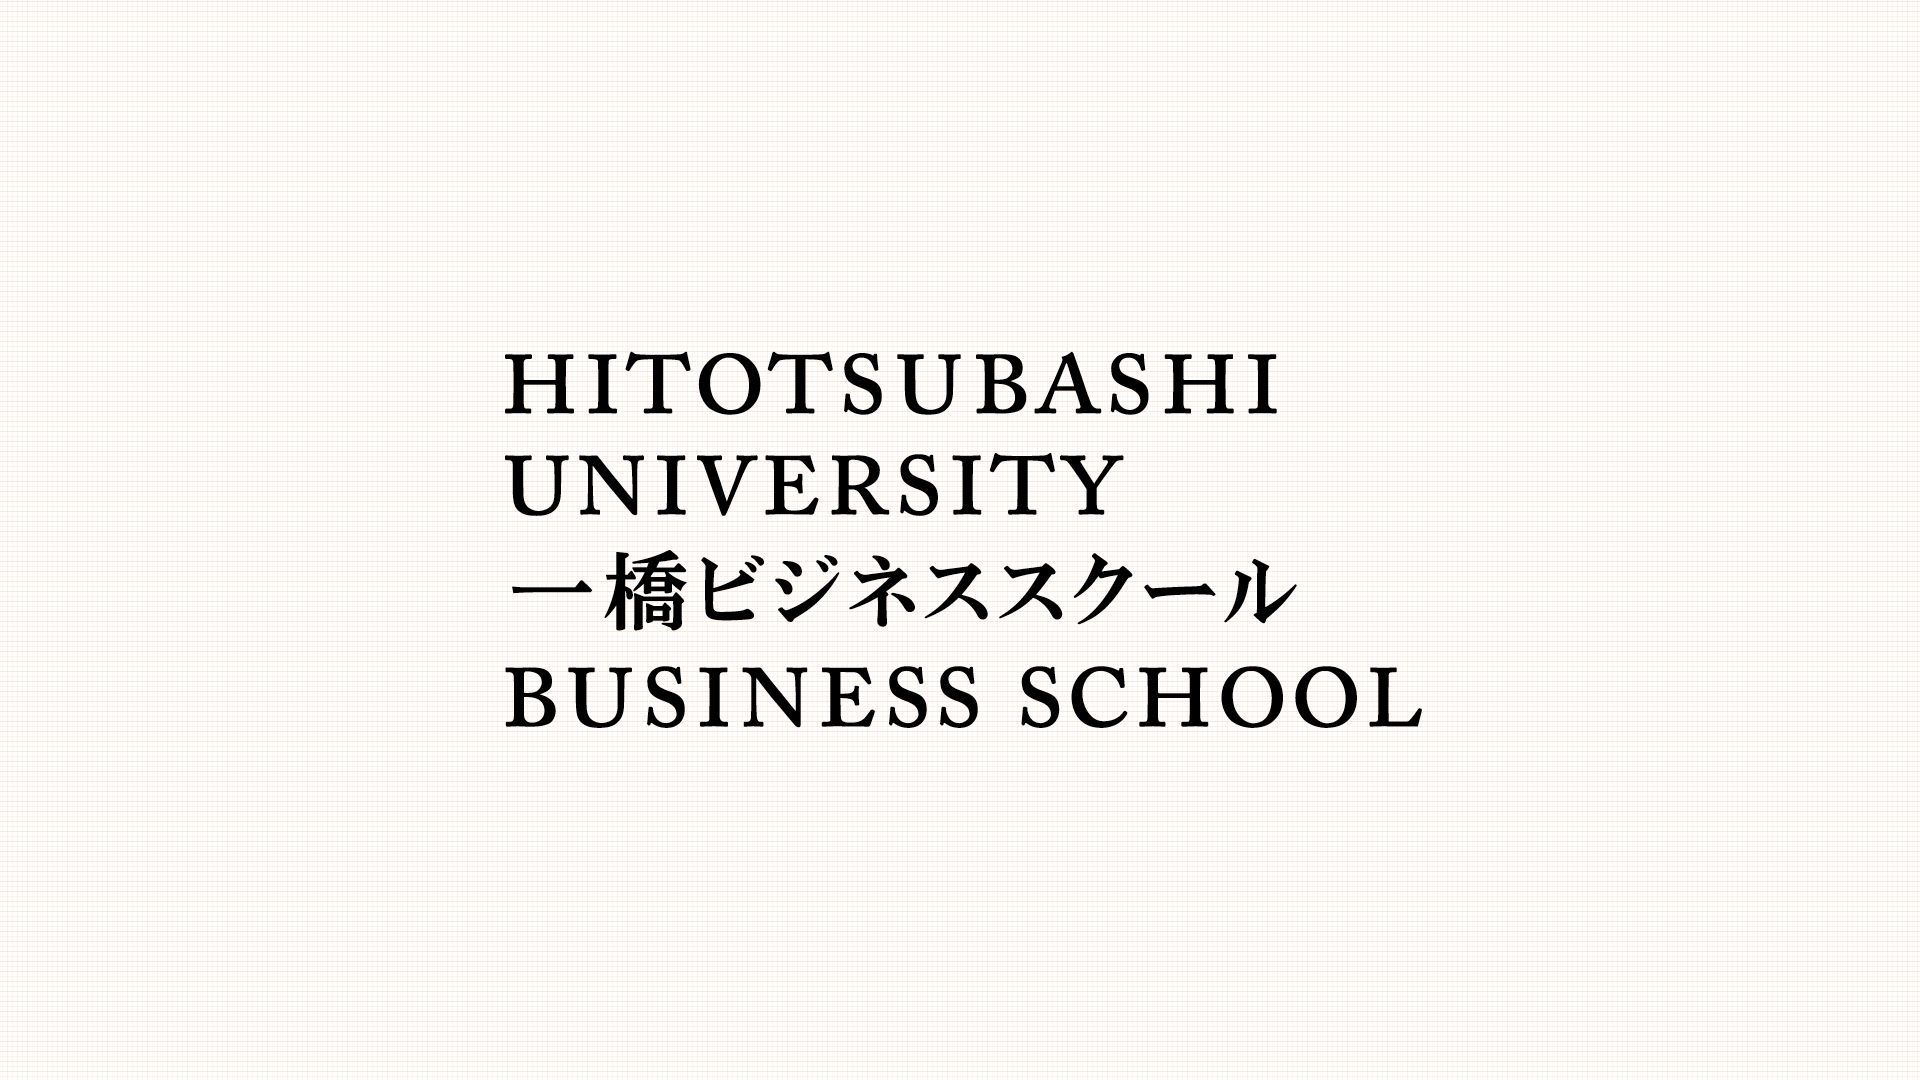 Hitotsubashi Business School's Signature